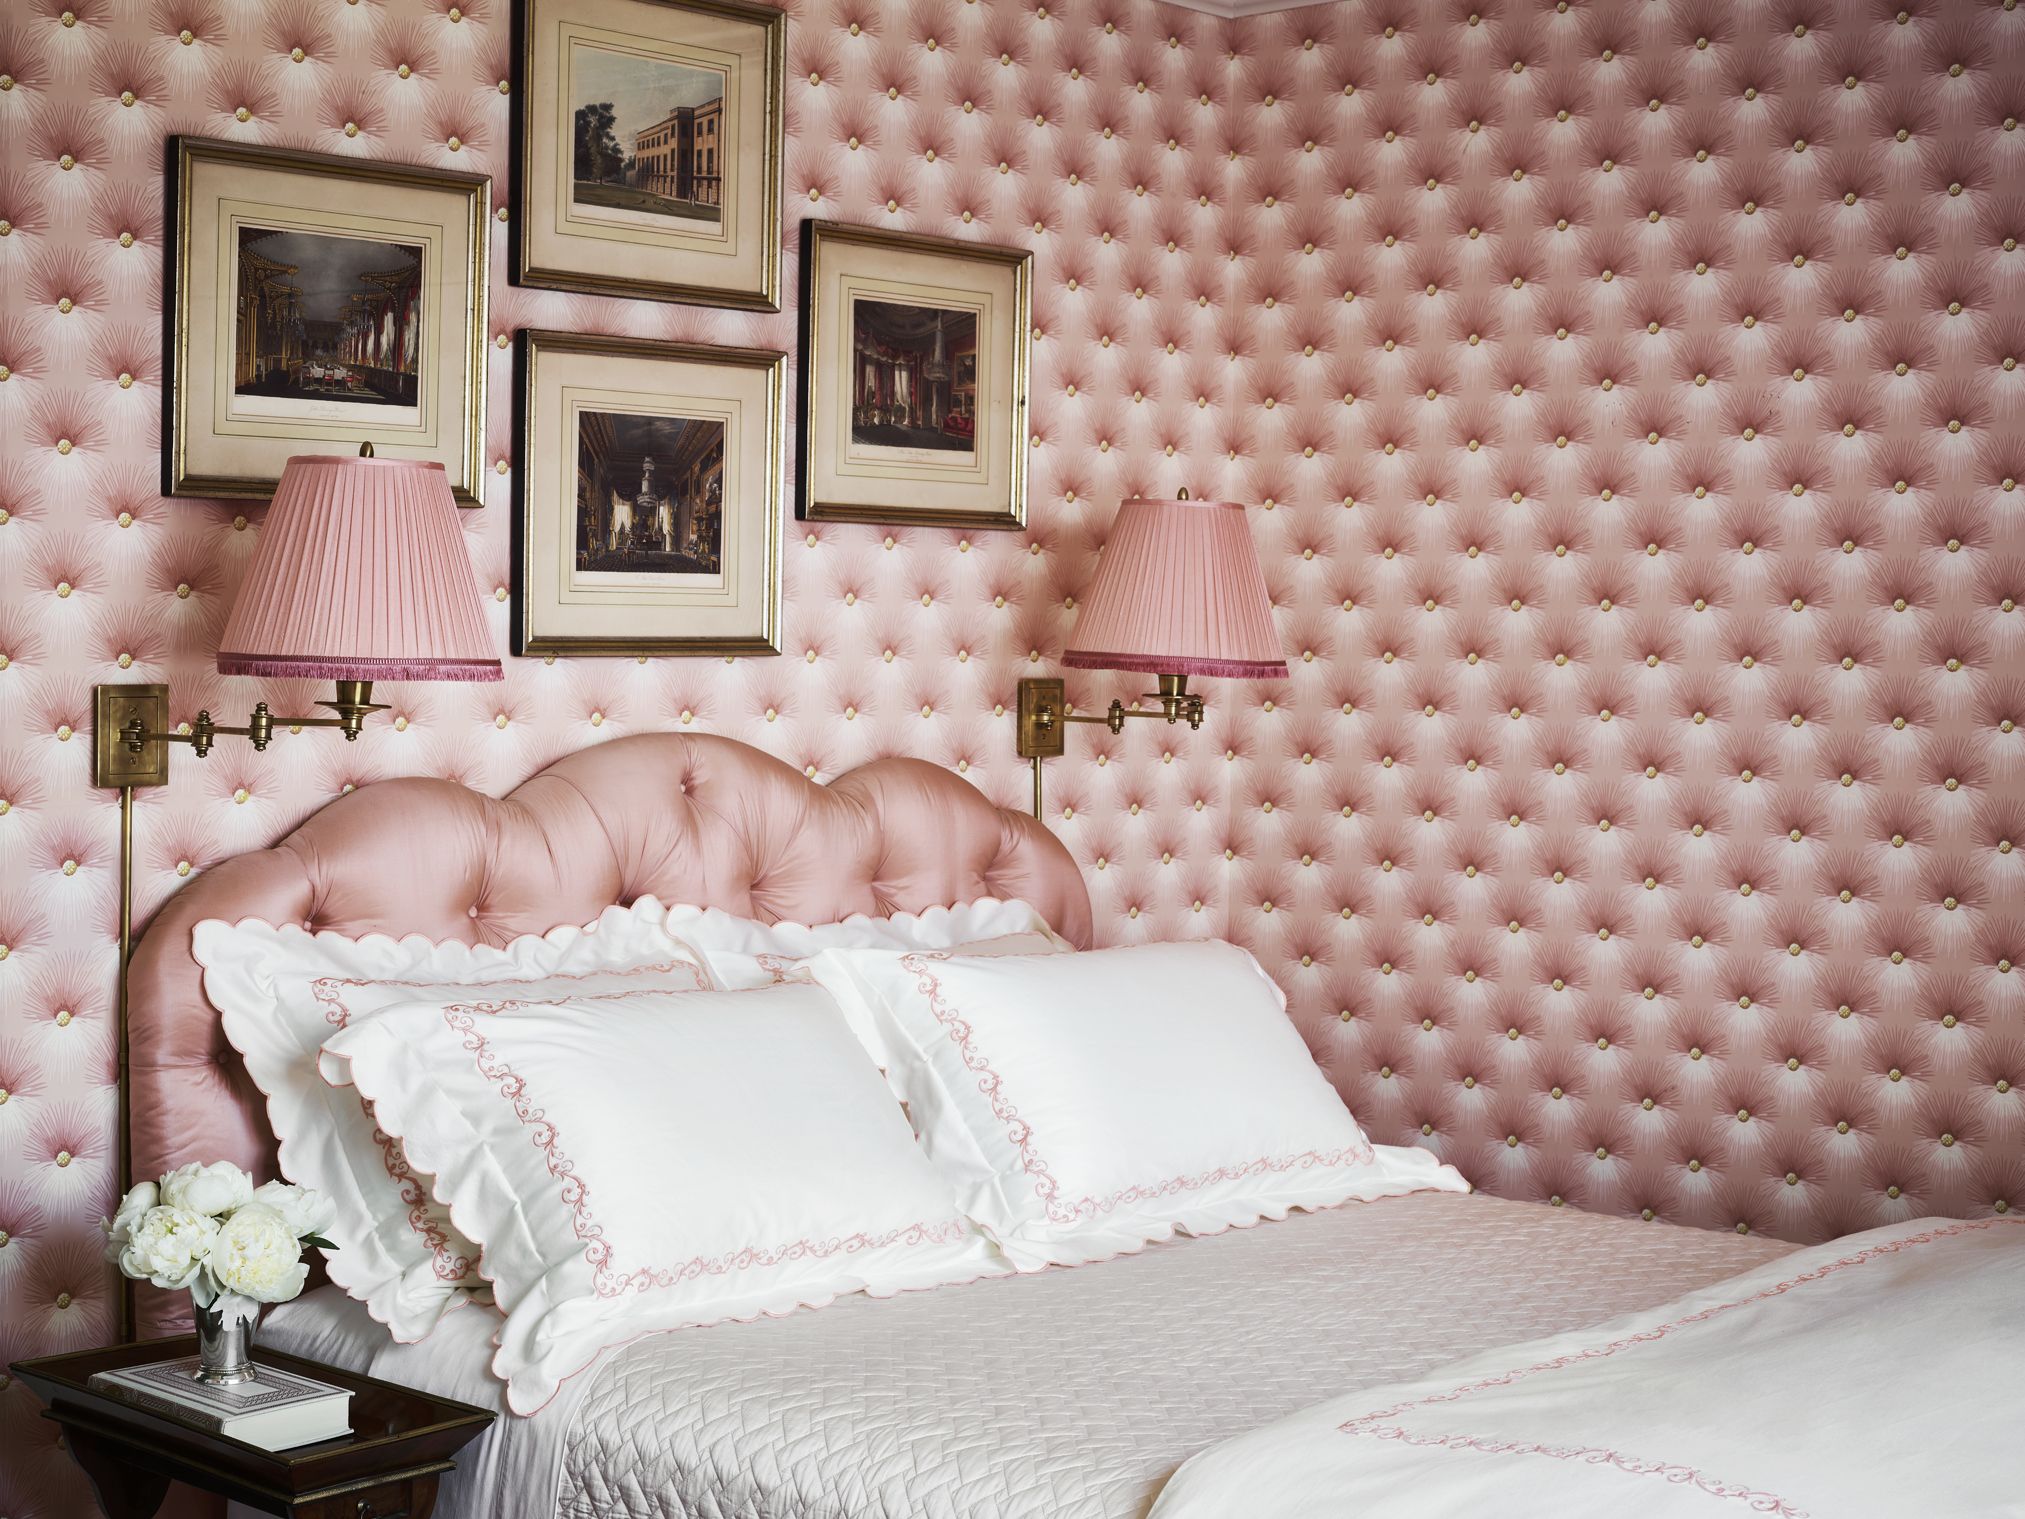 coisacomfy | Bedroom decor, Bedroom design, Pretty bedroom